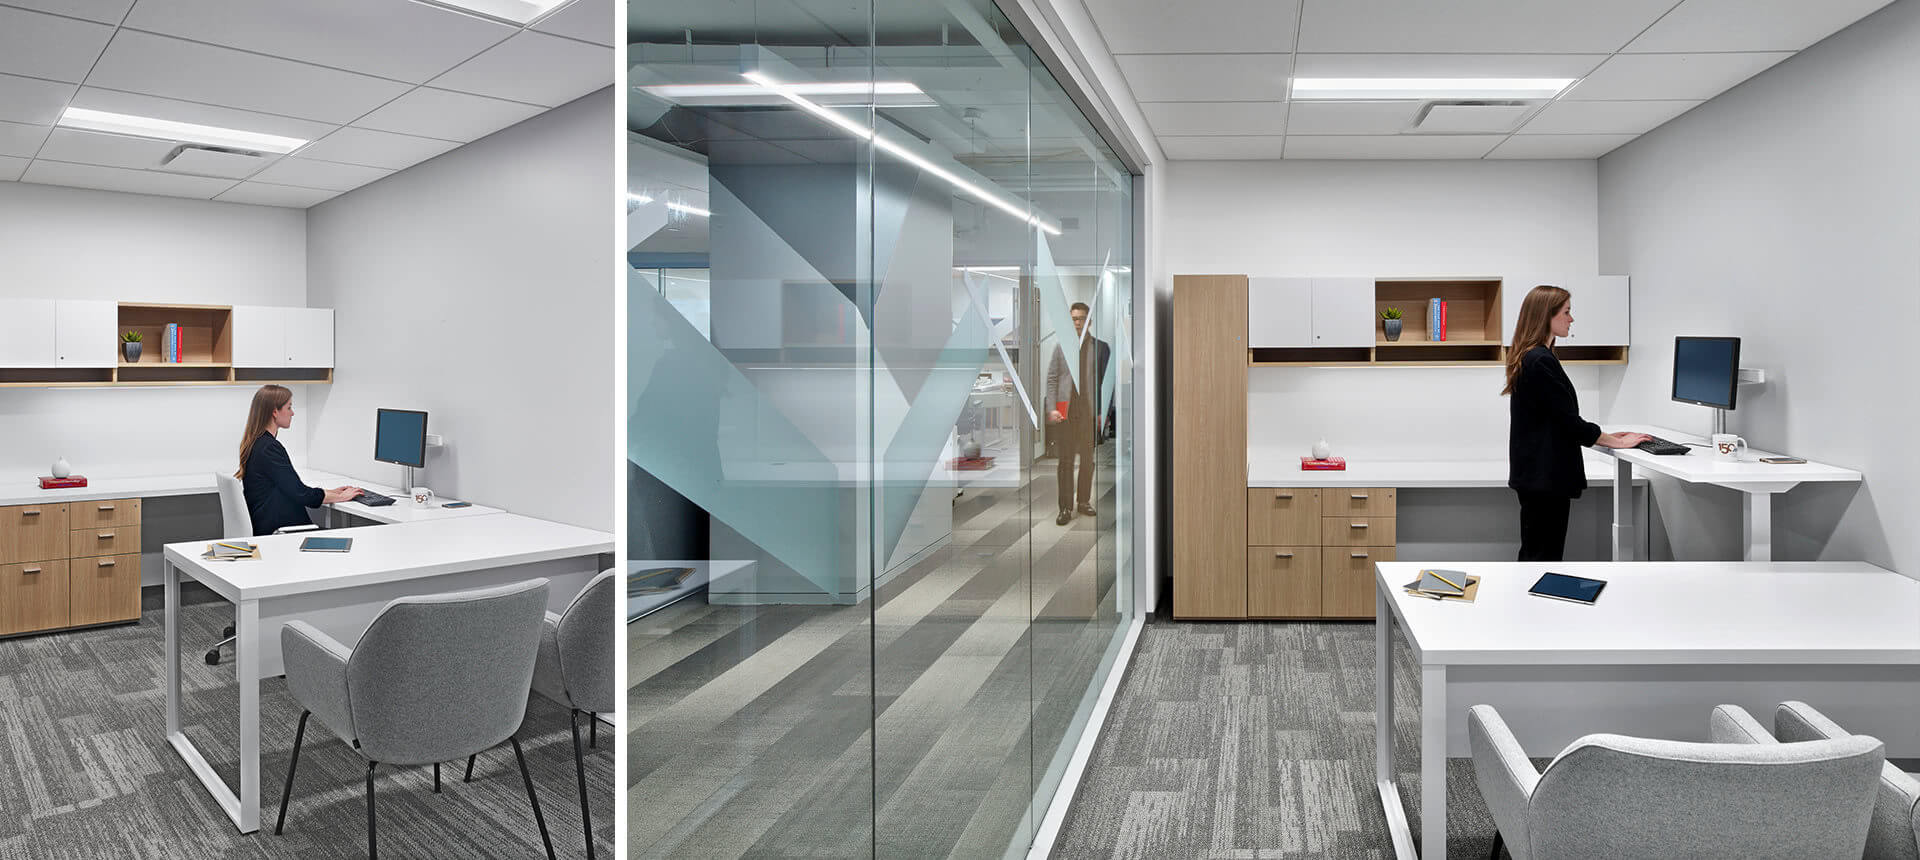 Workplace Interior Architecture and Design 3